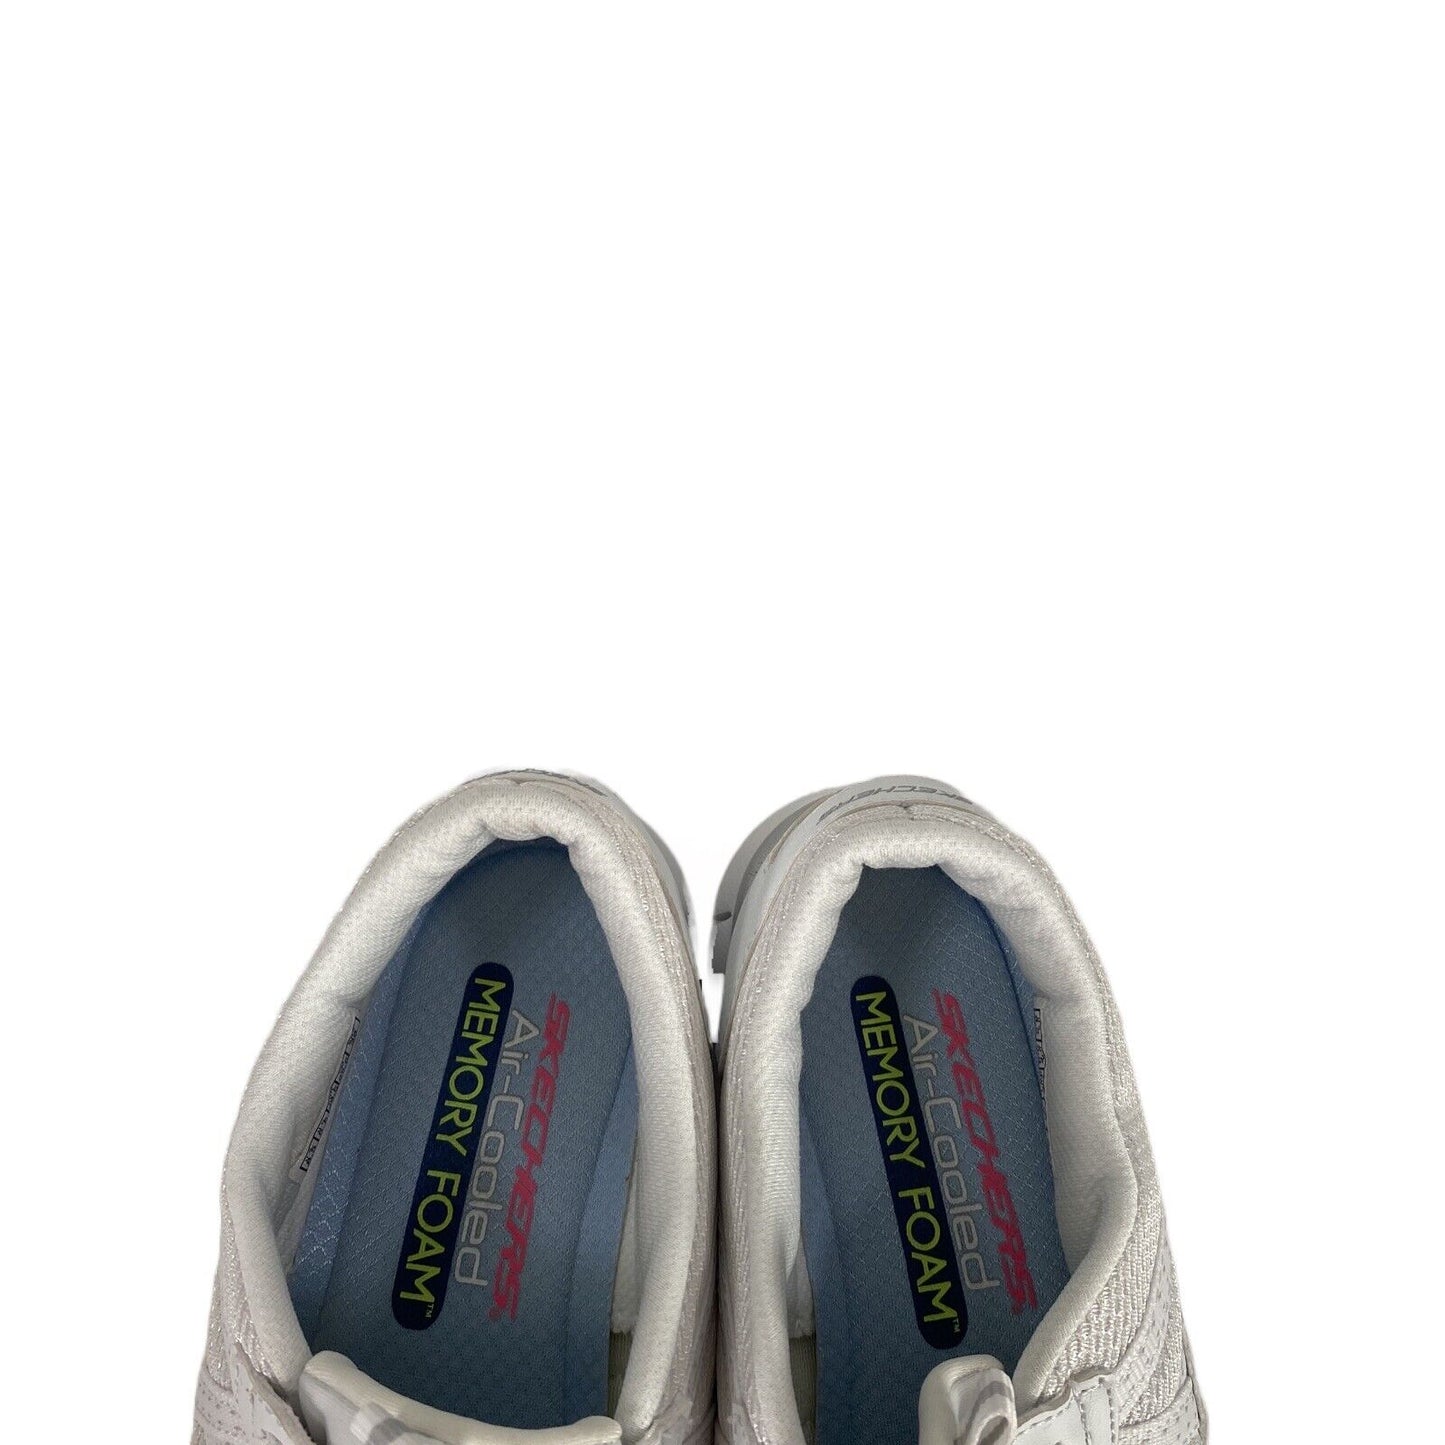 Skechers Women's White Air-Cooled Gratis Slip On Sneakers - 8.5